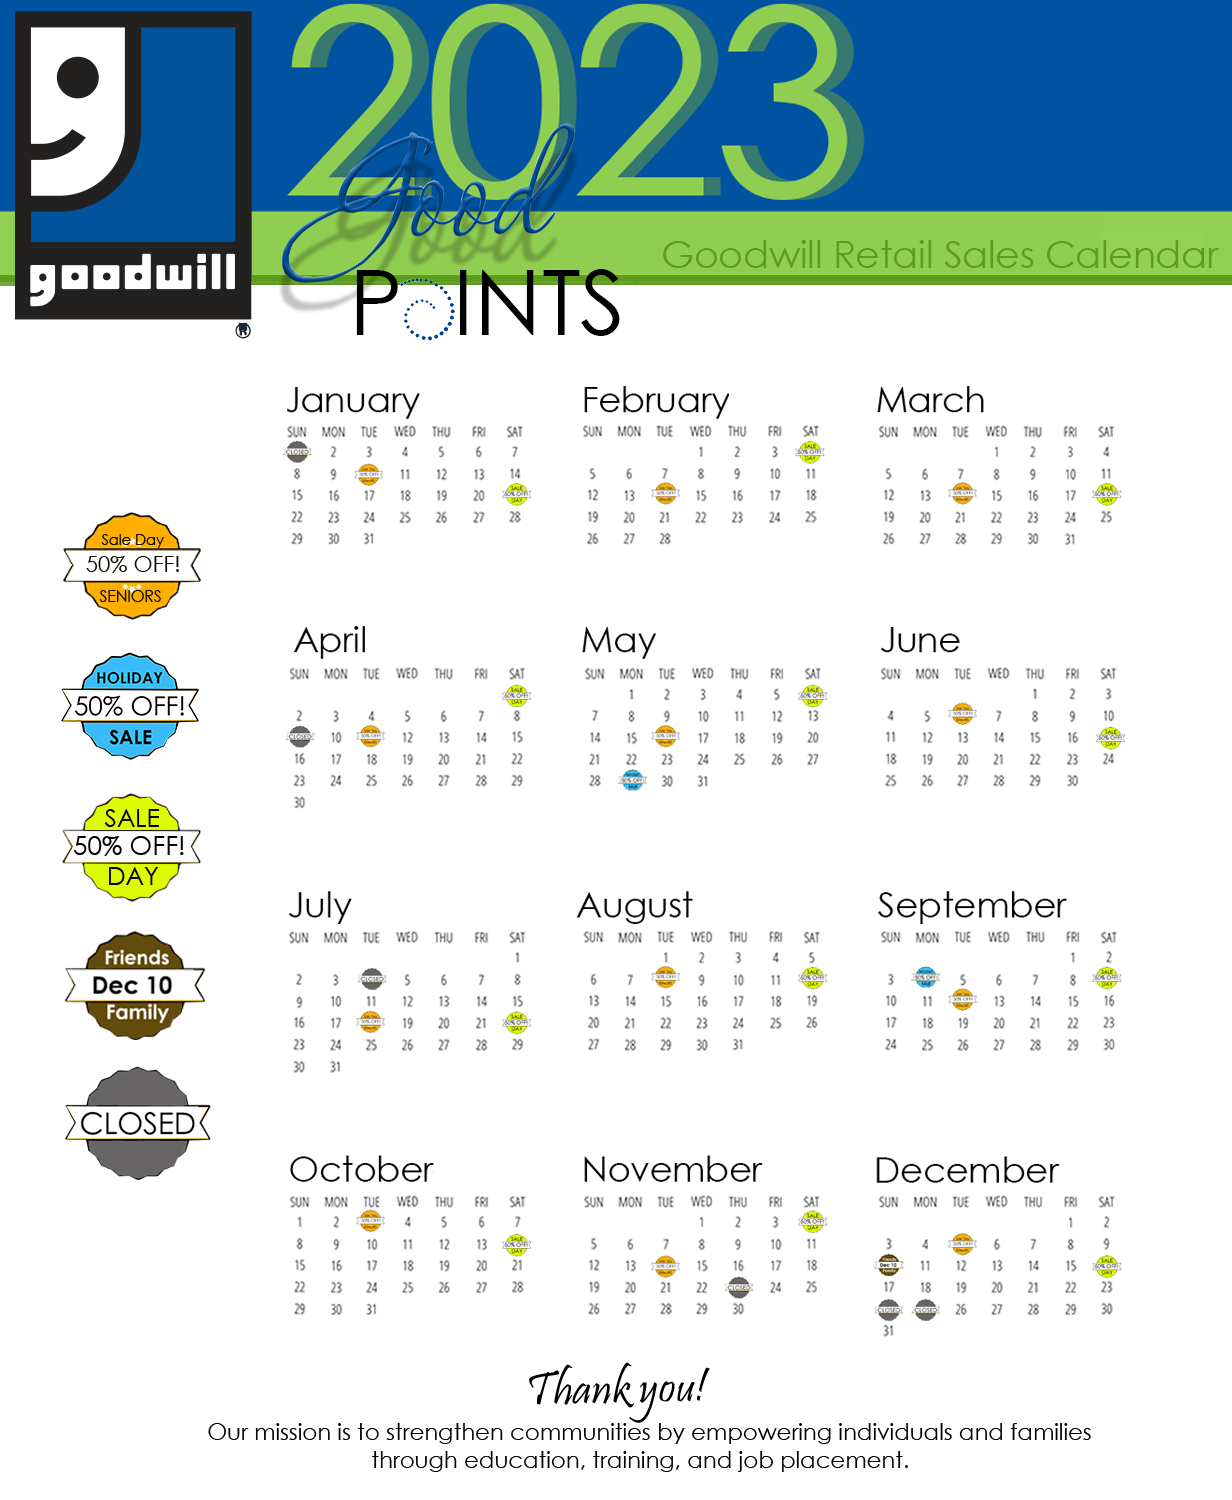 goodwill-of-michiana-sales-calendar-2023-2023-printable-calendar